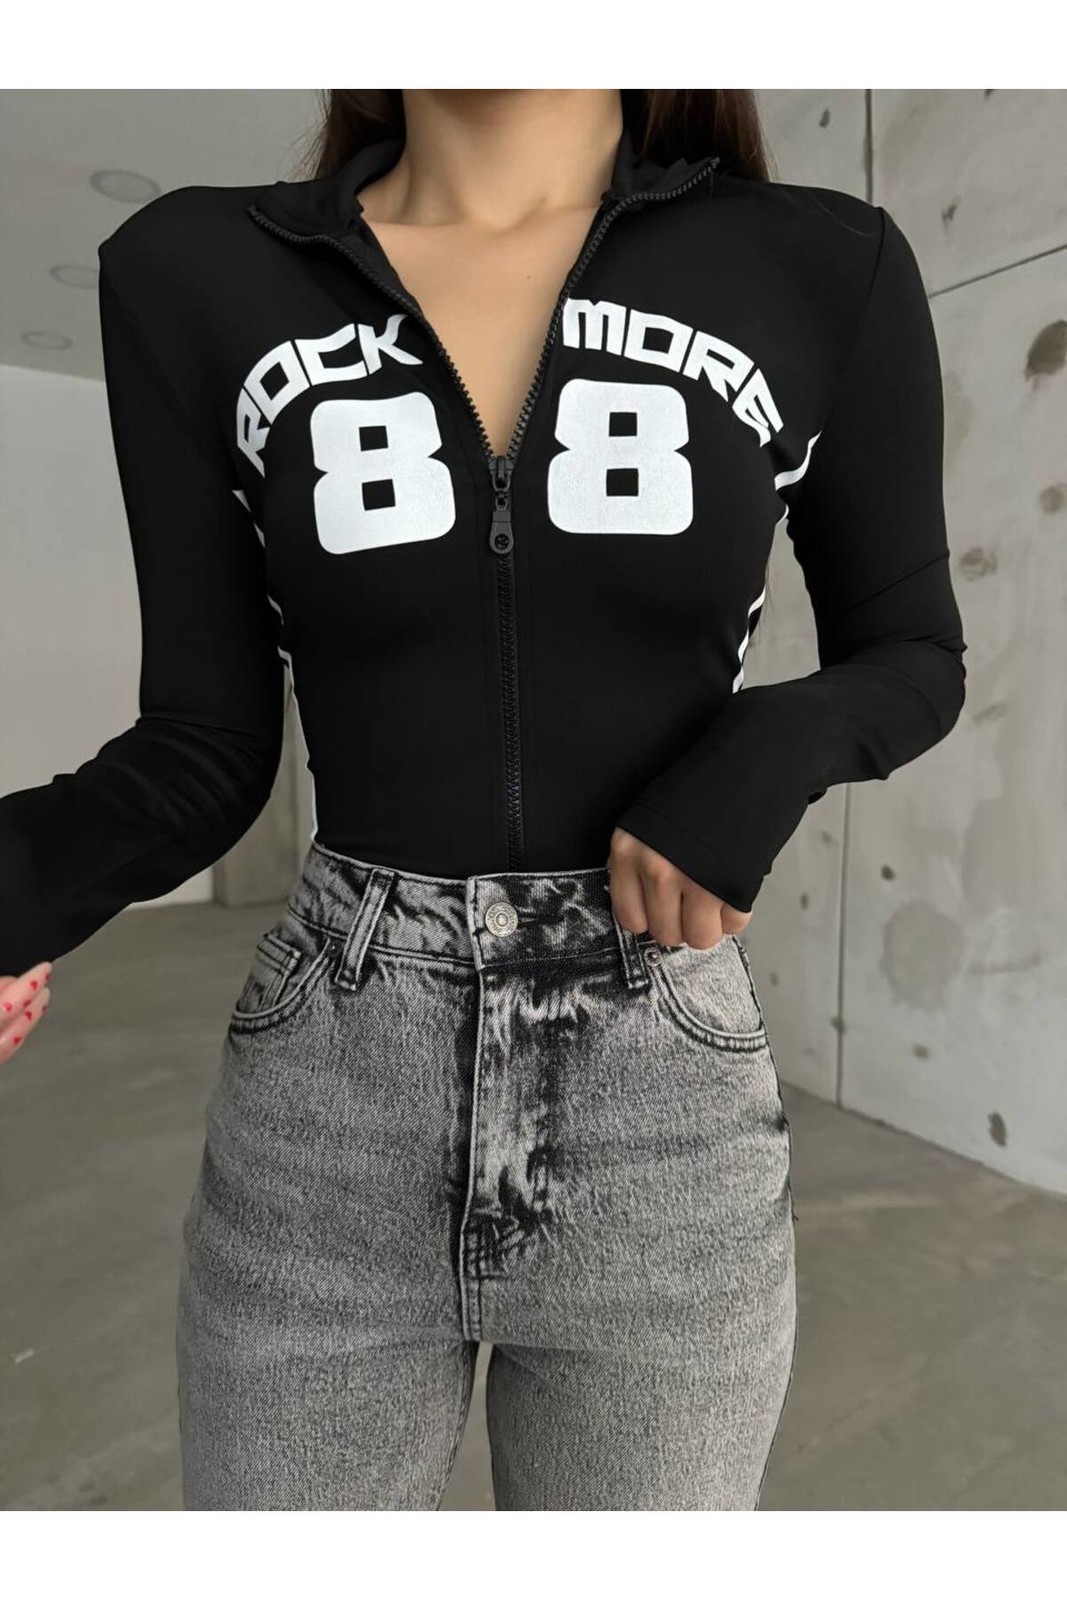 BİKELİFE Rock More Zipper High Neck Slim/Fitted Elastic Knitted Bodysuit